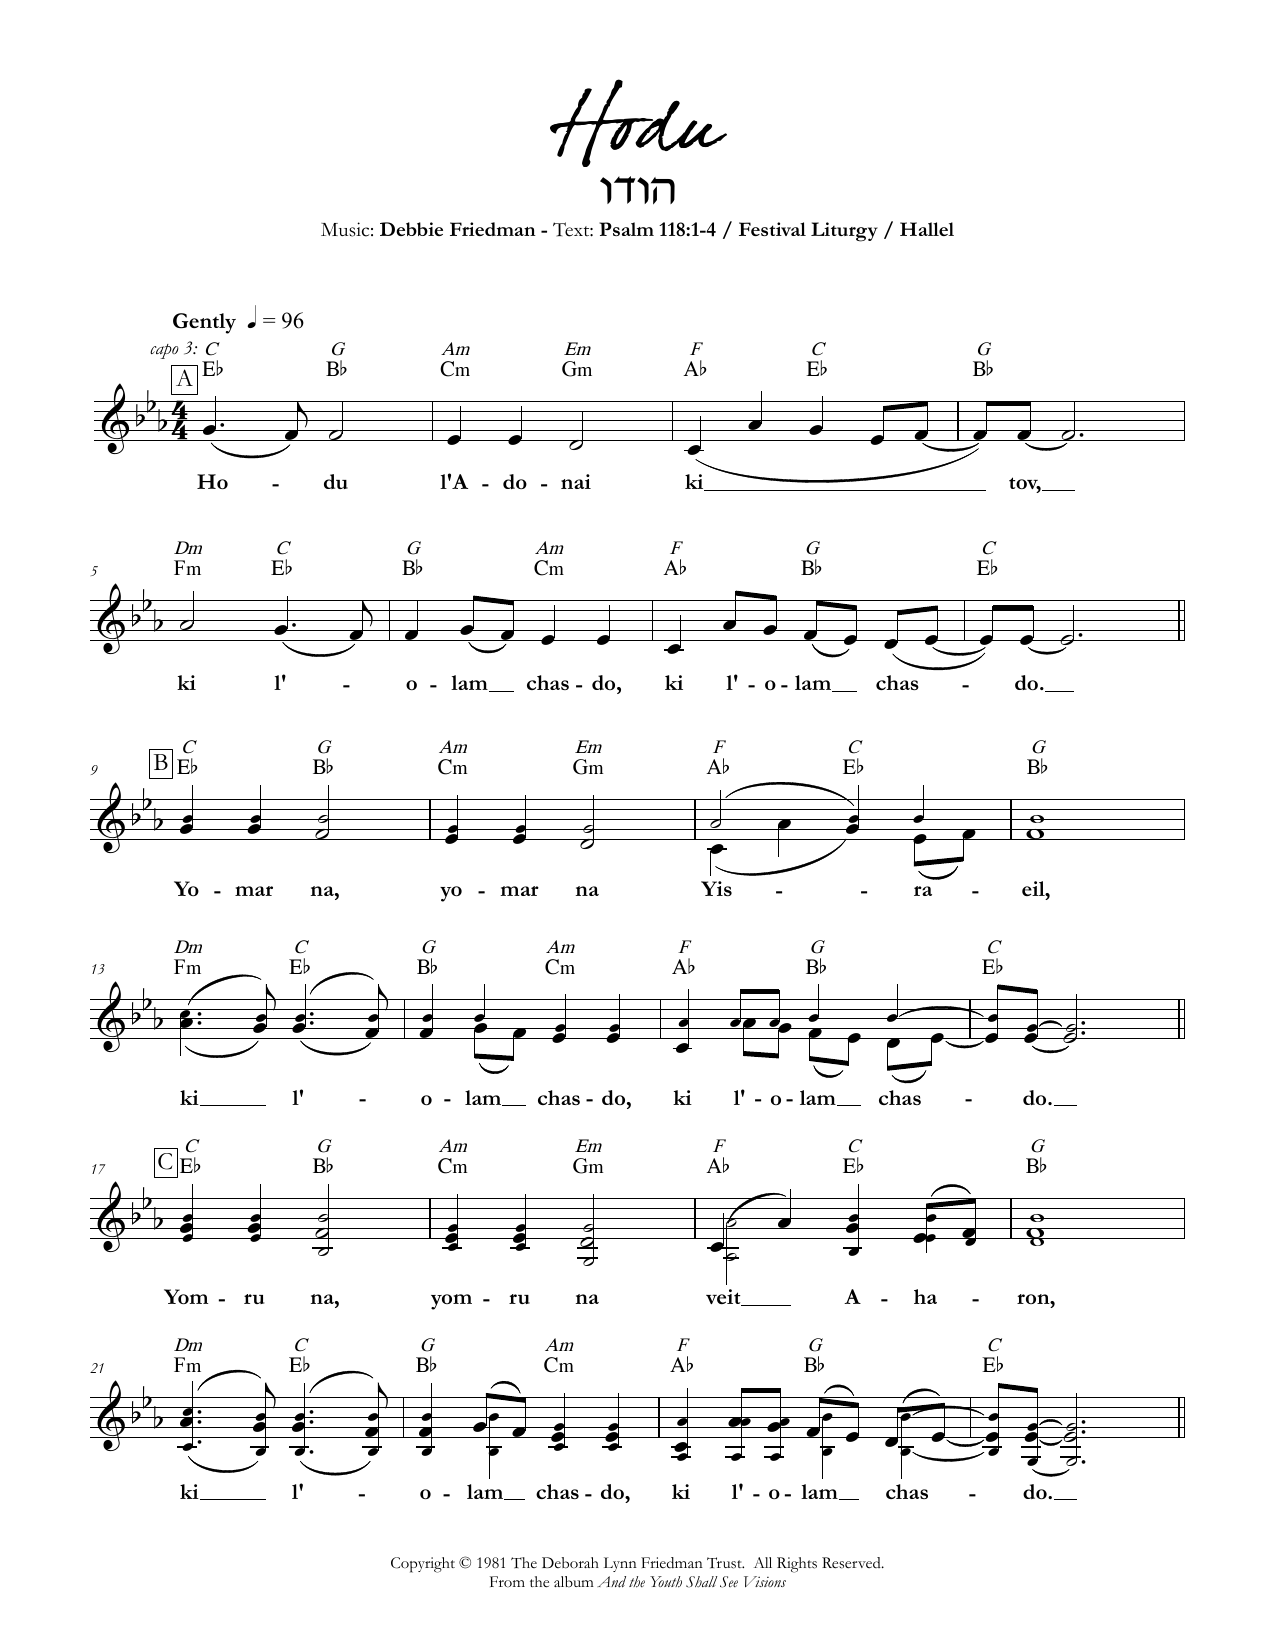 Debbie Friedman Hodu Sheet Music Notes & Chords for Lead Sheet / Fake Book - Download or Print PDF